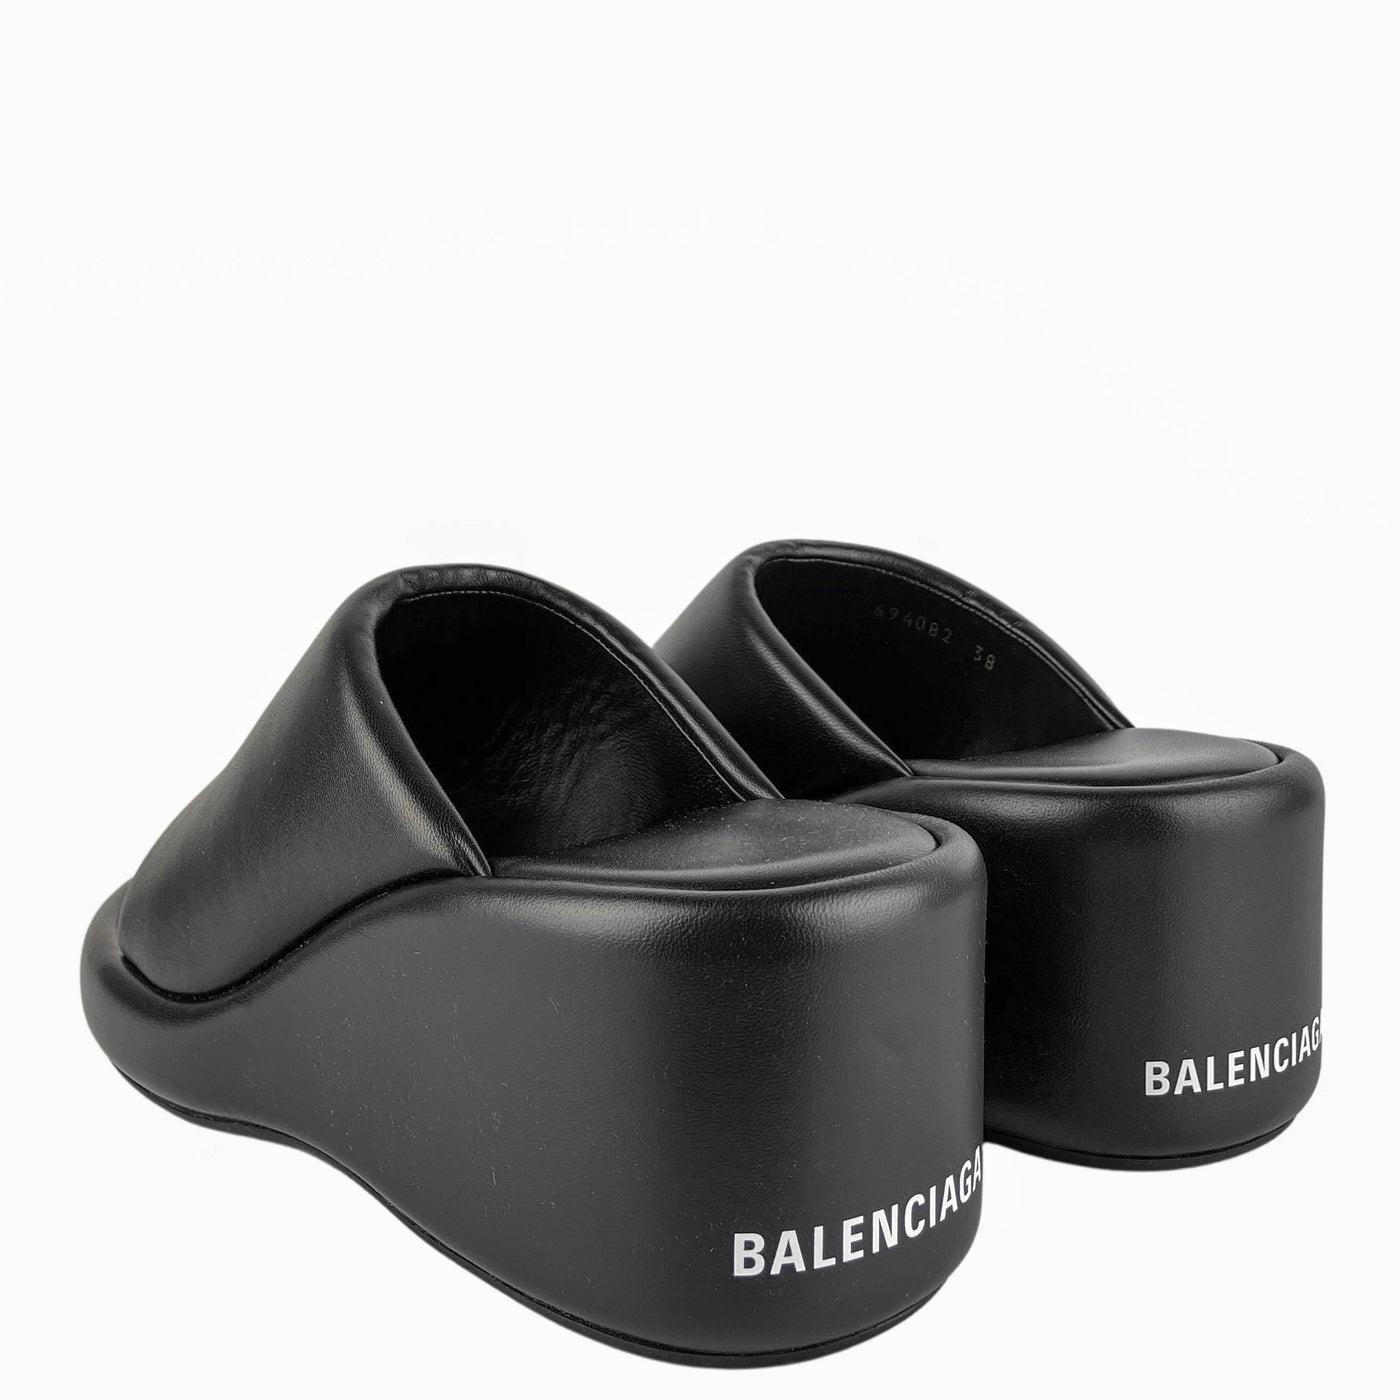 Balenciaga Rise Wedge Leather Sandals - Discounts on Balenciaga at UAL